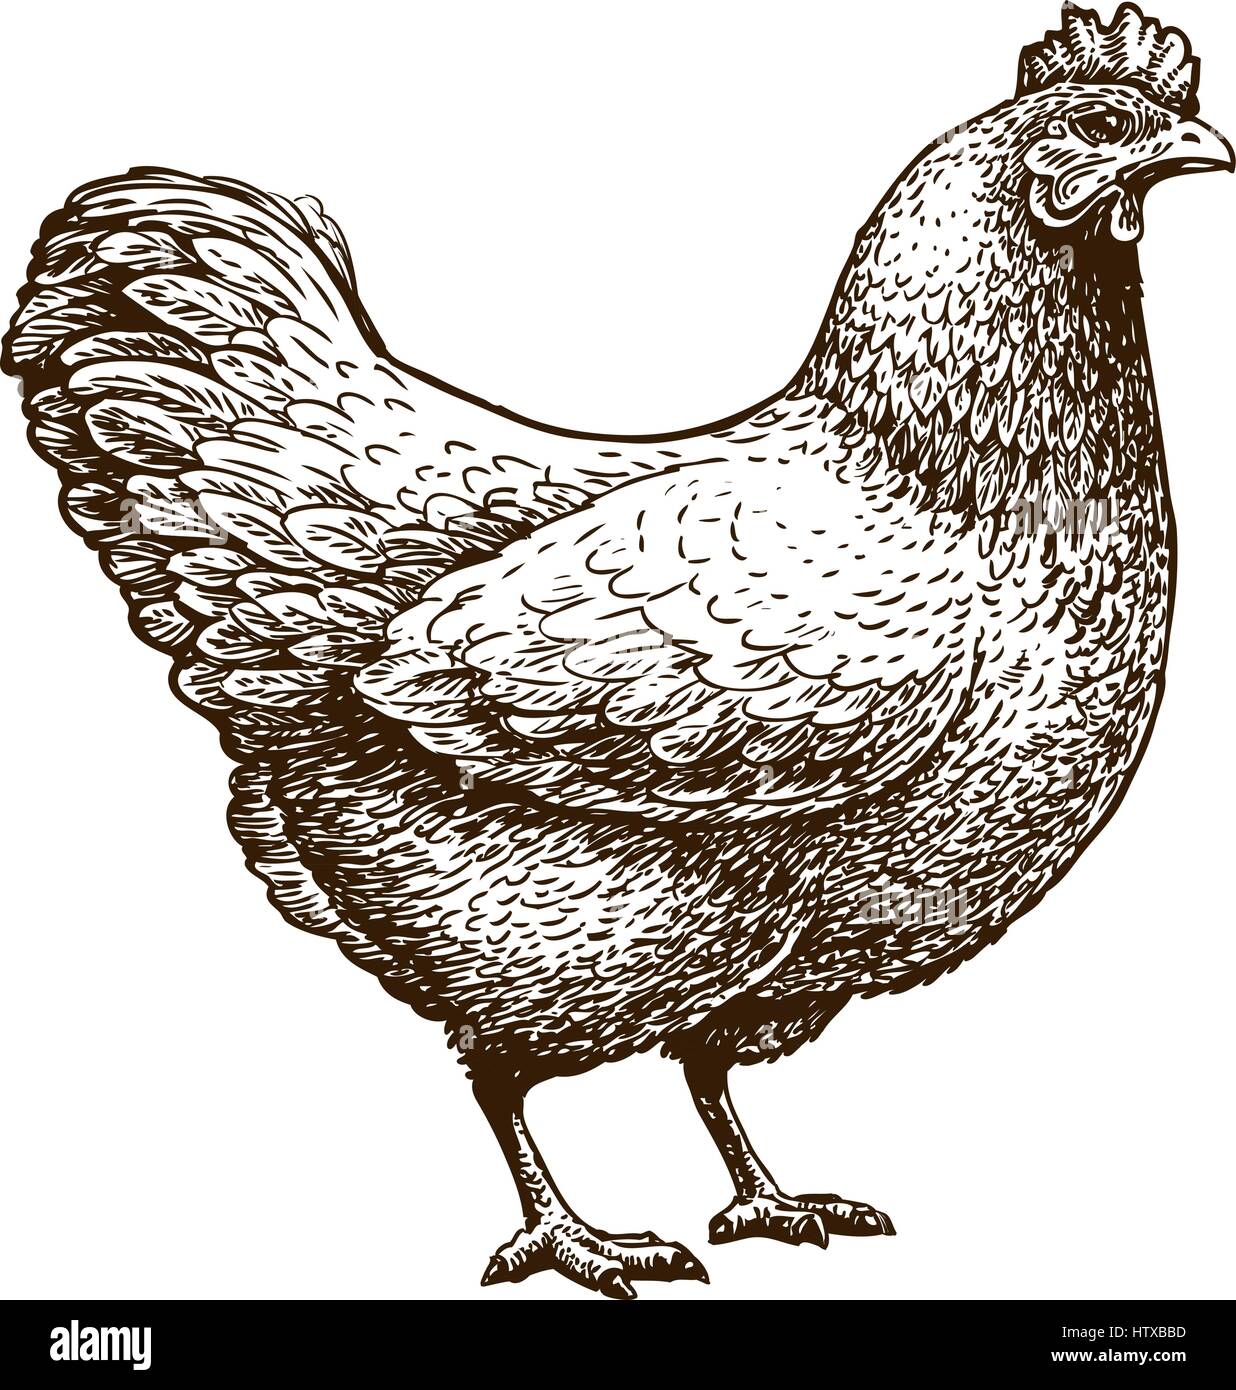 Handdrawn Chicken Hen Poultry Broiler Farm Stock Vector Royalty Free  1425746495  Shutterstock